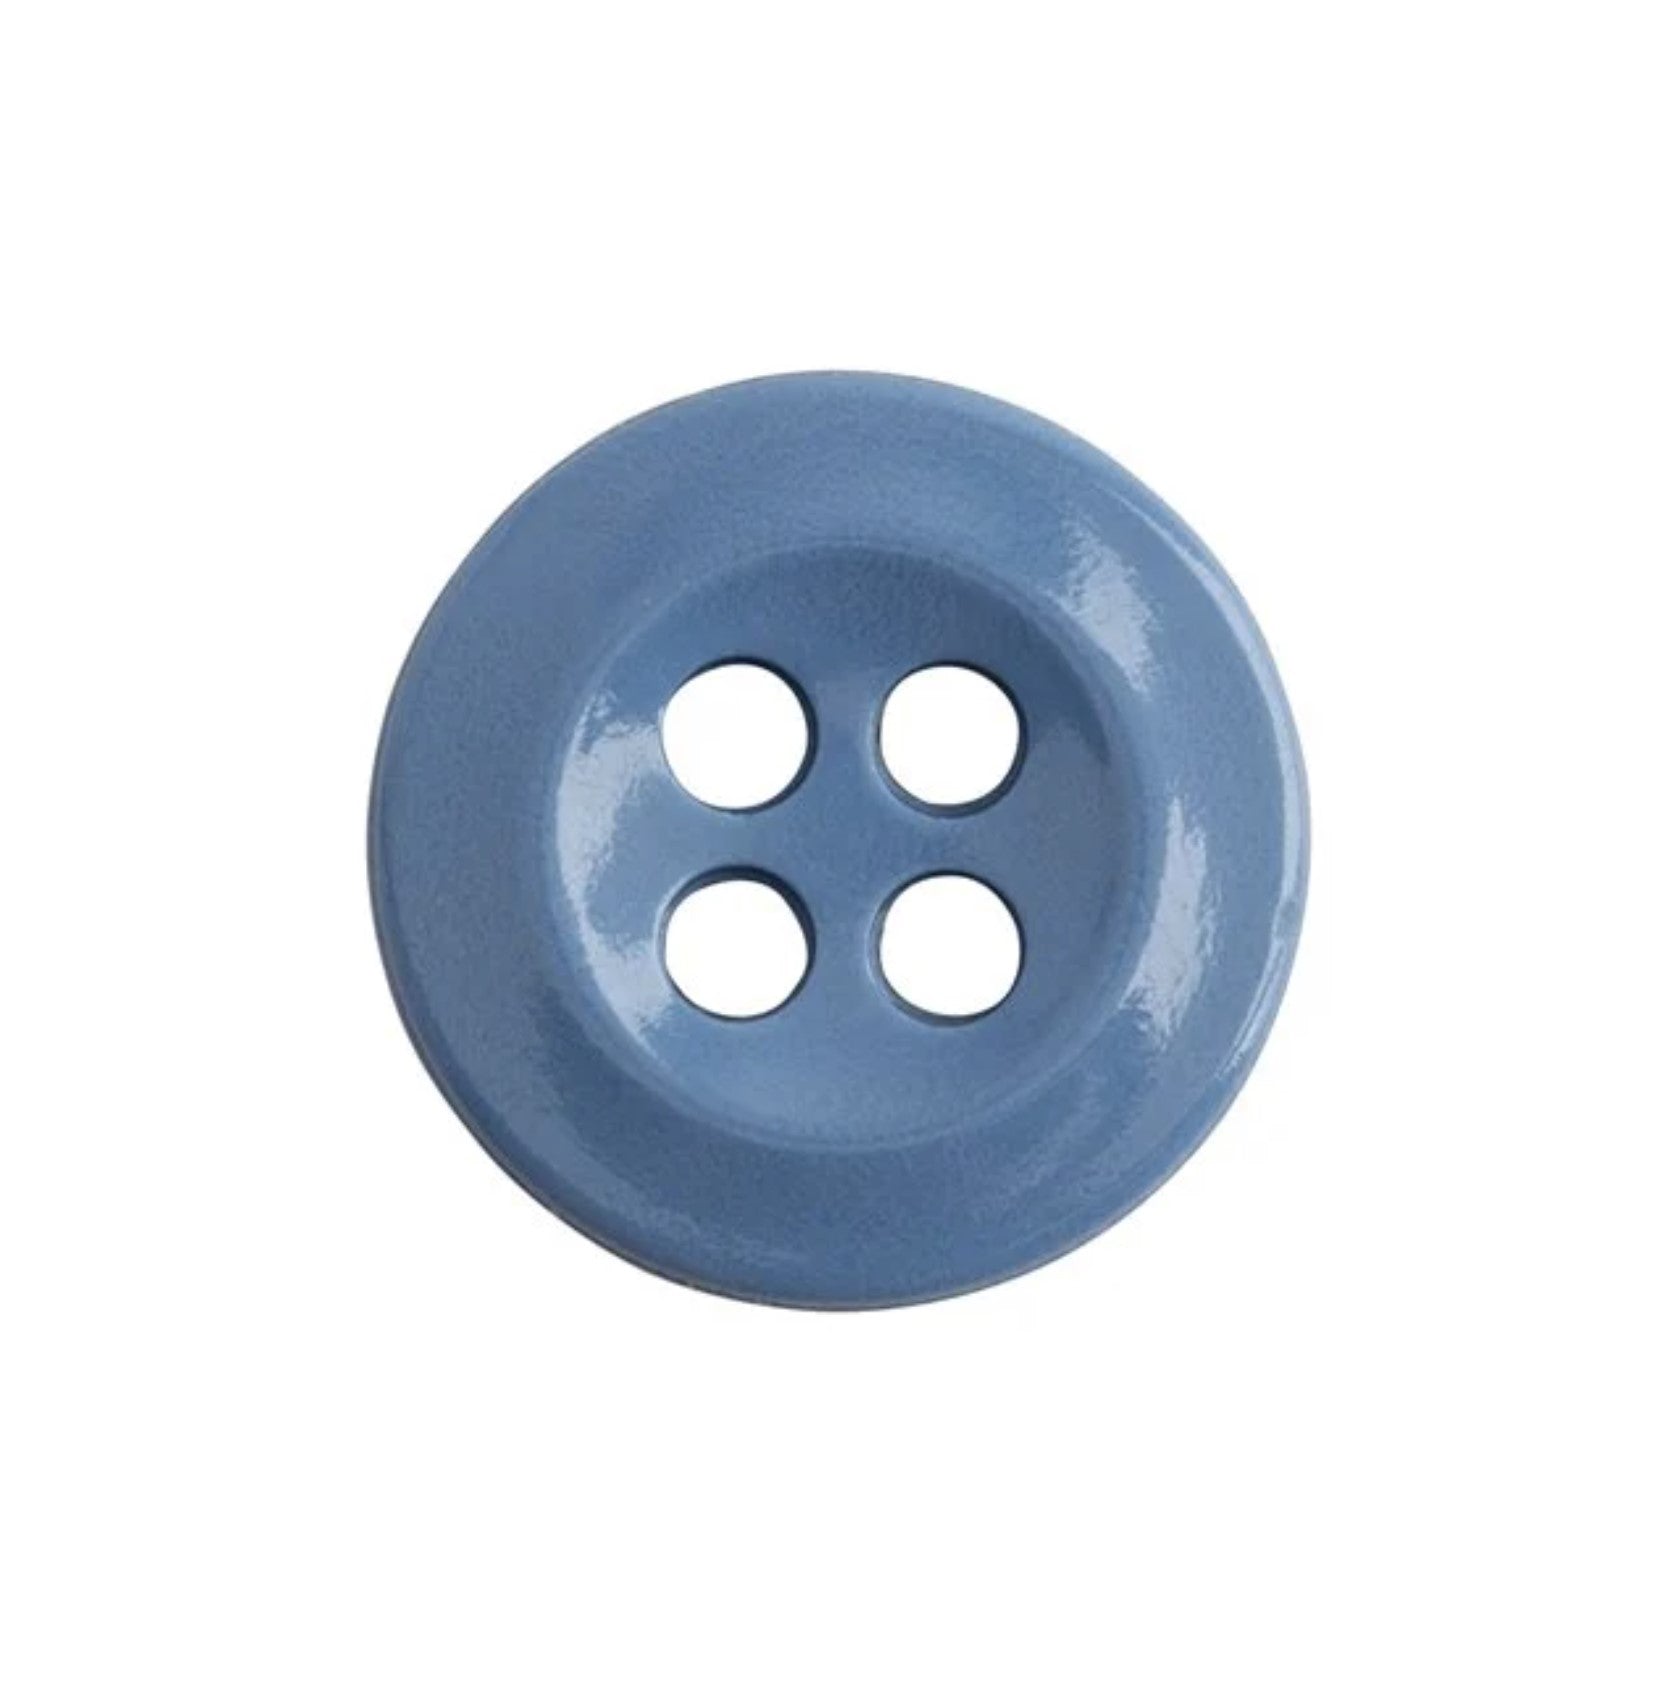 Industrial Strength Shirt Buttons -- Size: 20L / 12.5mm -- Light Blue Color